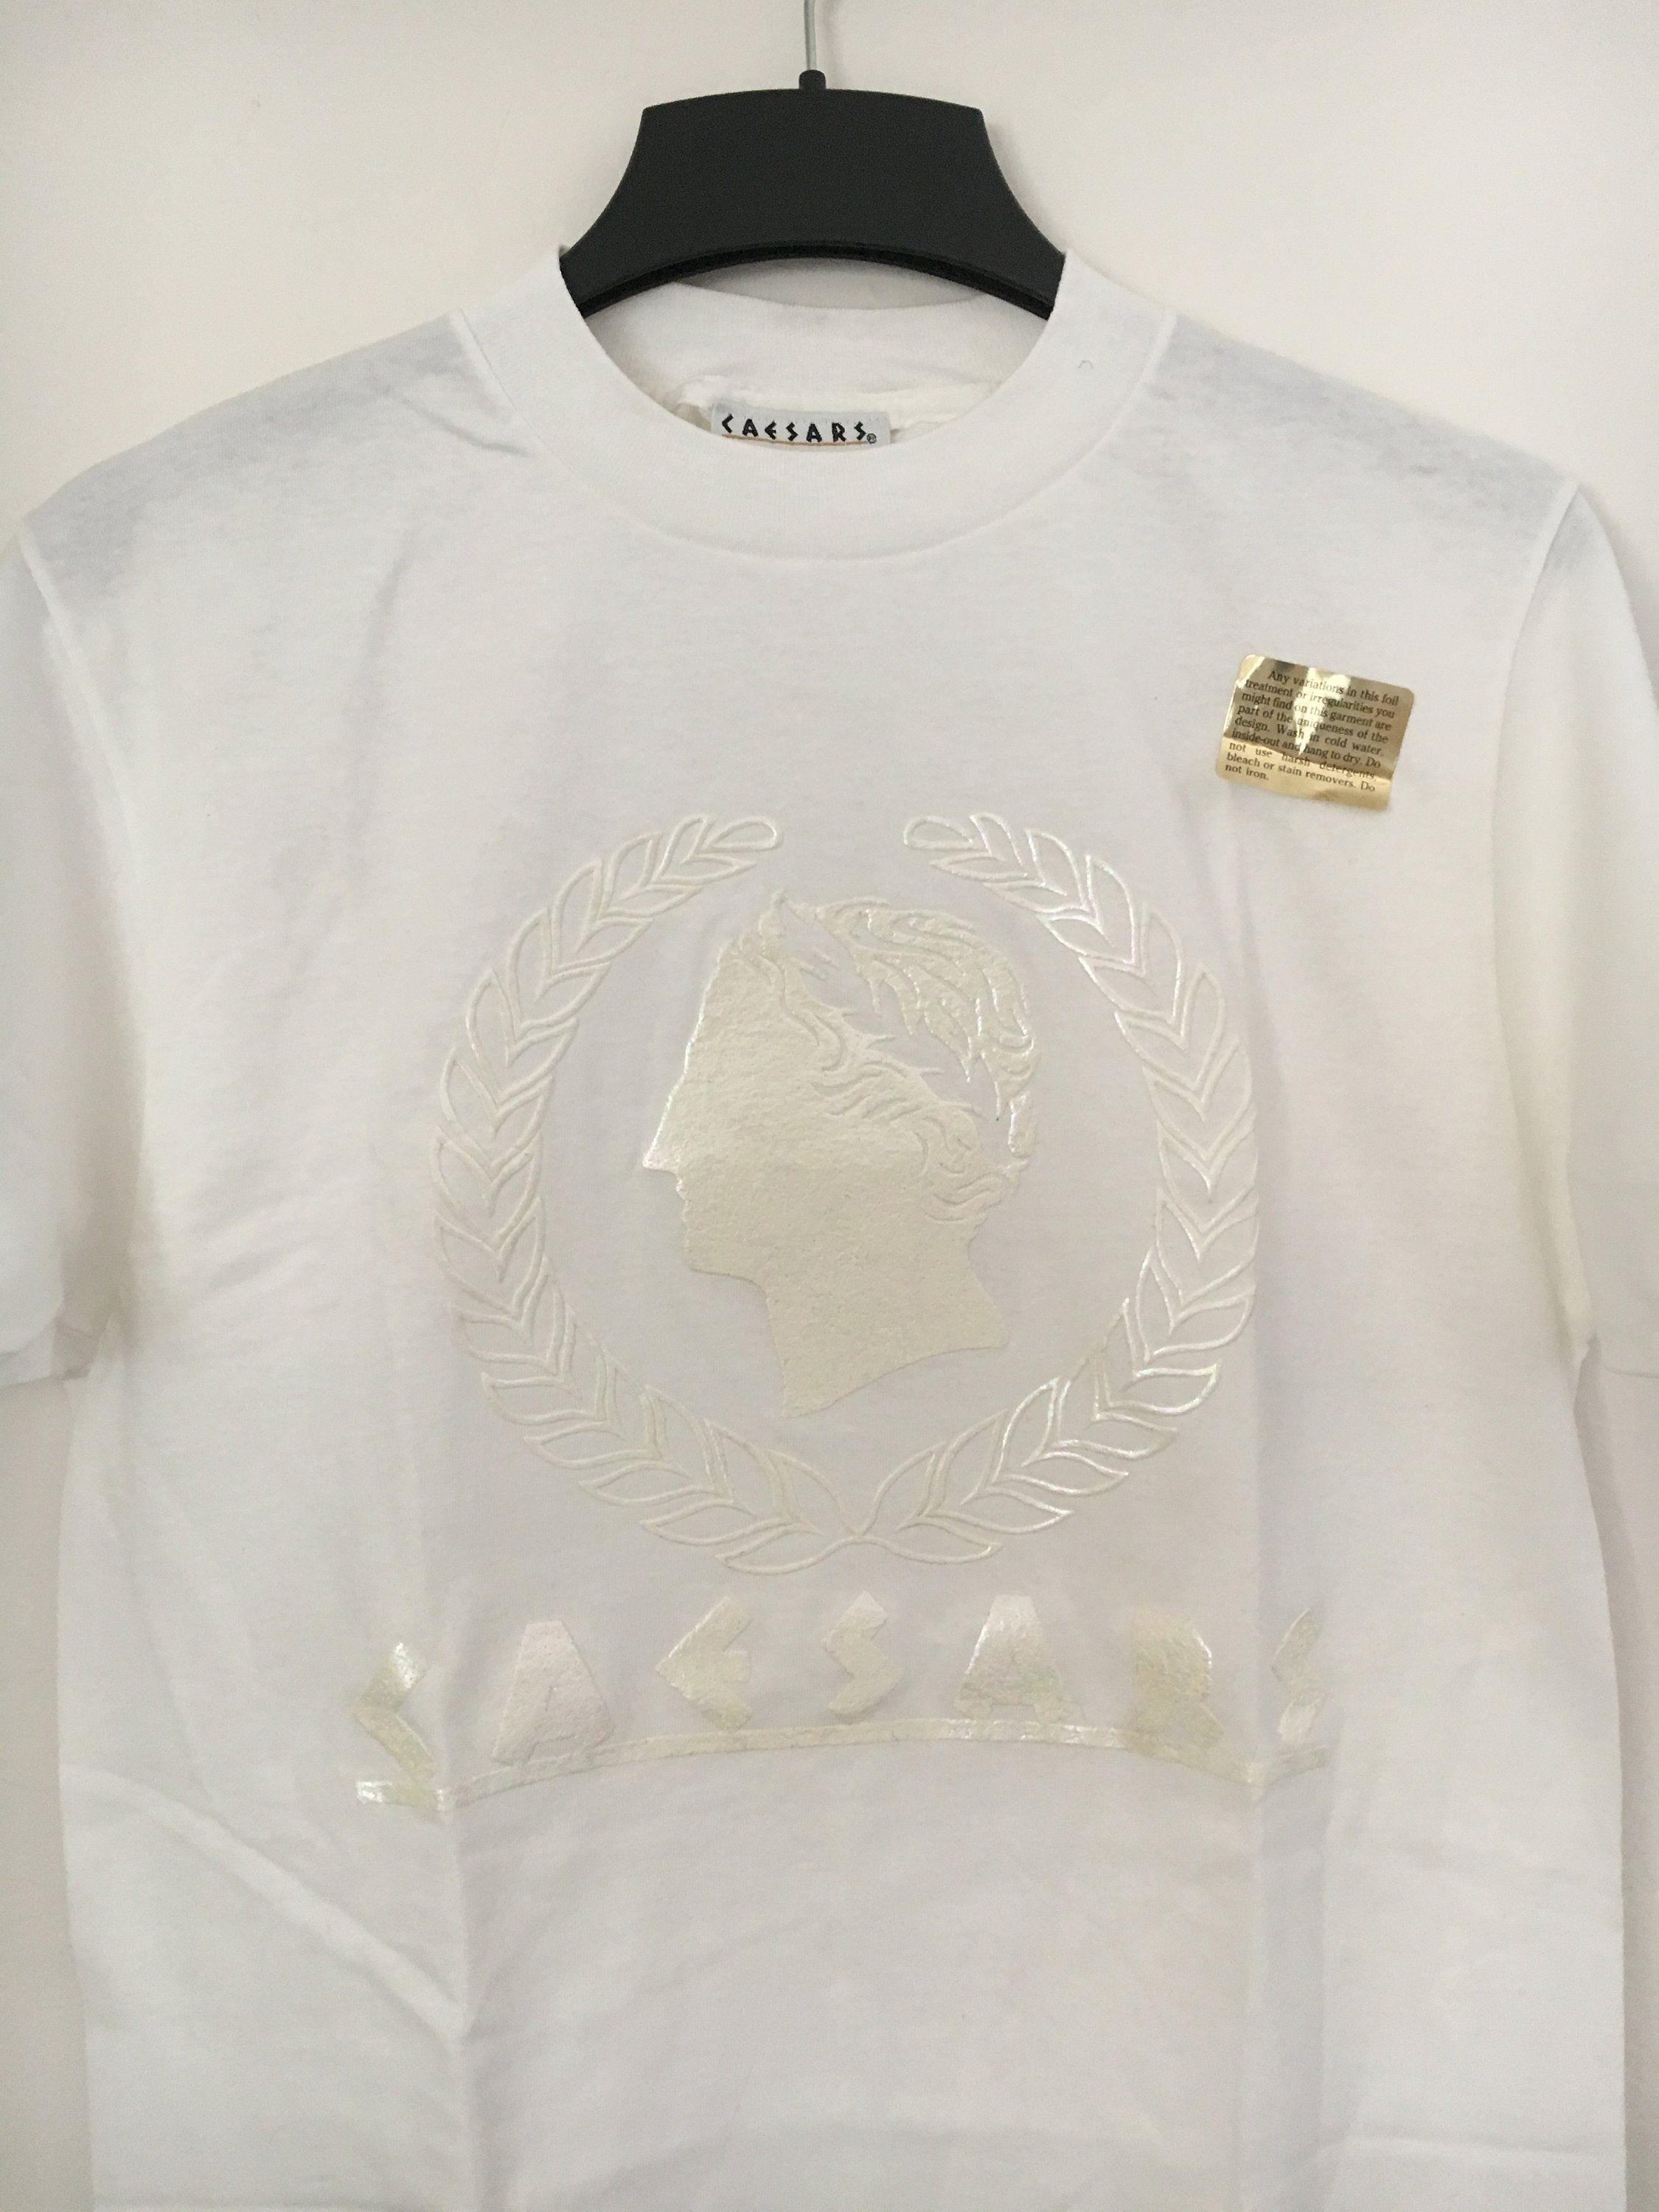 Casesar Palace Shirts Logo - Vintage Men's All-White Caesars Palace - Las Vegas - Graphic T-Shirt ...